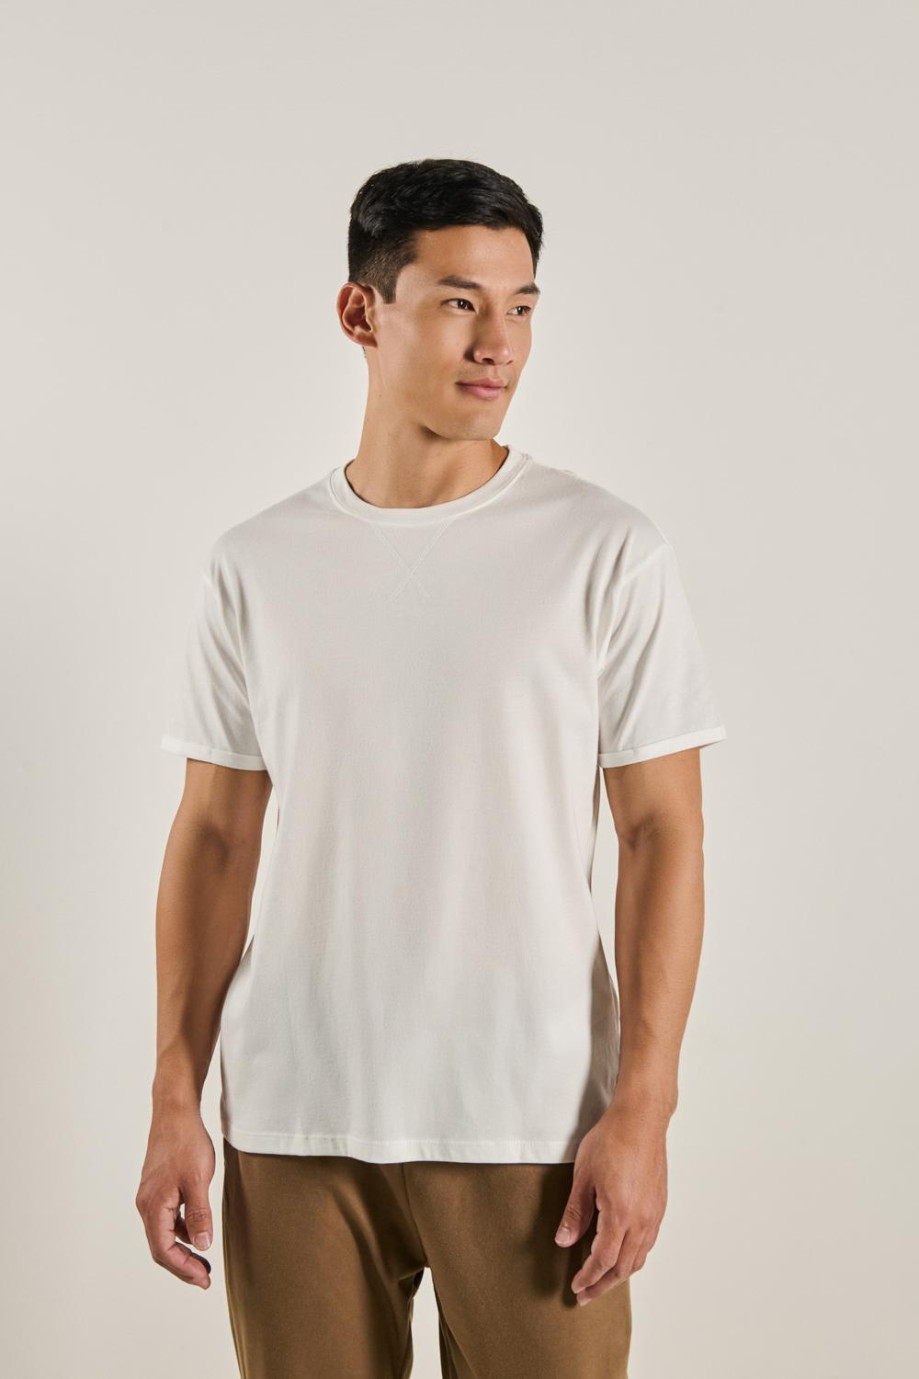 Camiseta unicolor con costura decorativa y manga corta